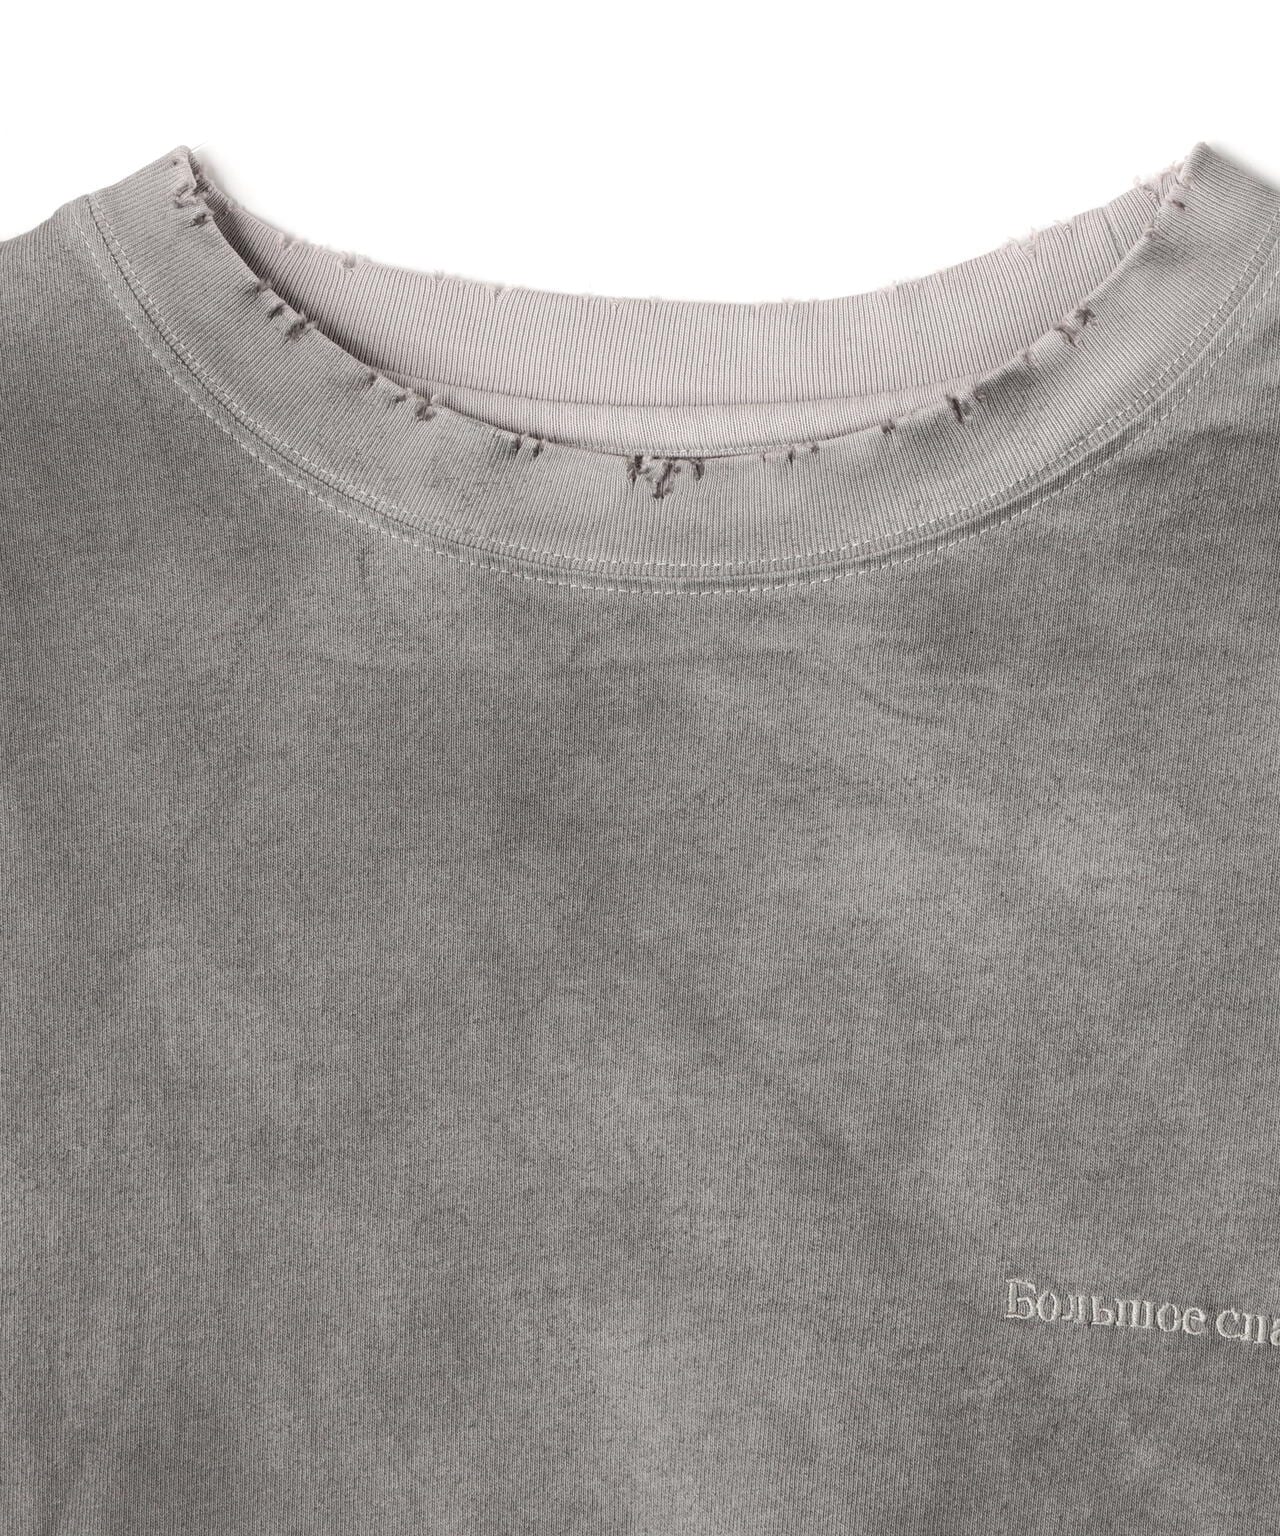 DankeSchon/ダンケシェーン/PIGMENT SPRAYING CIRCLE S/S TEE/半袖Tシャツ